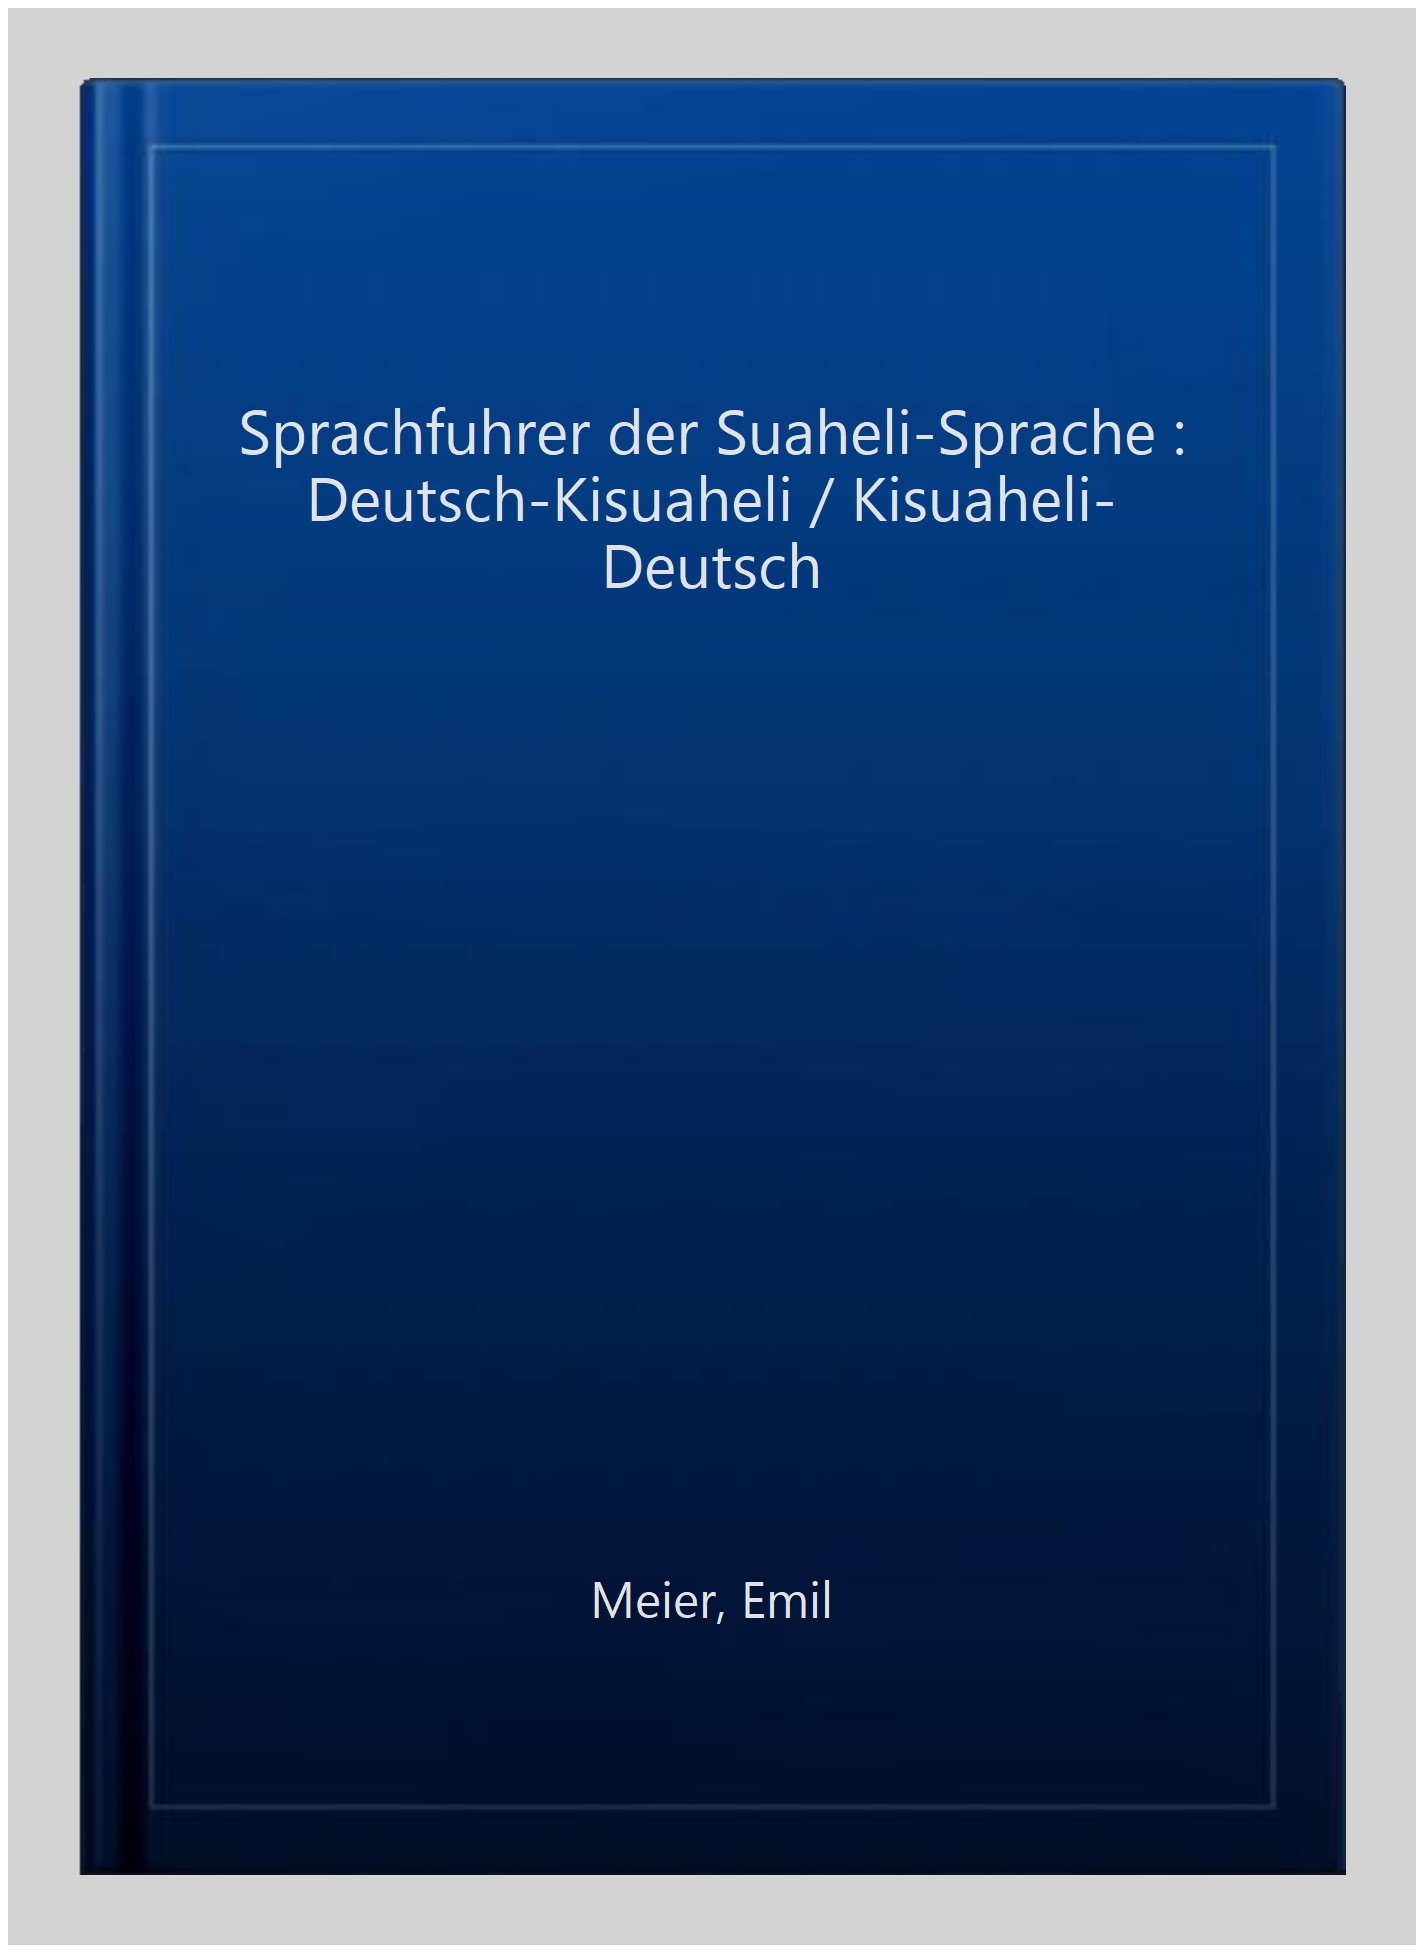 Sprachfuhrer der Suaheli-Sprache : Deutsch-Kisuaheli / Kisuaheli-Deutsch -Language: german - Meier, Emil